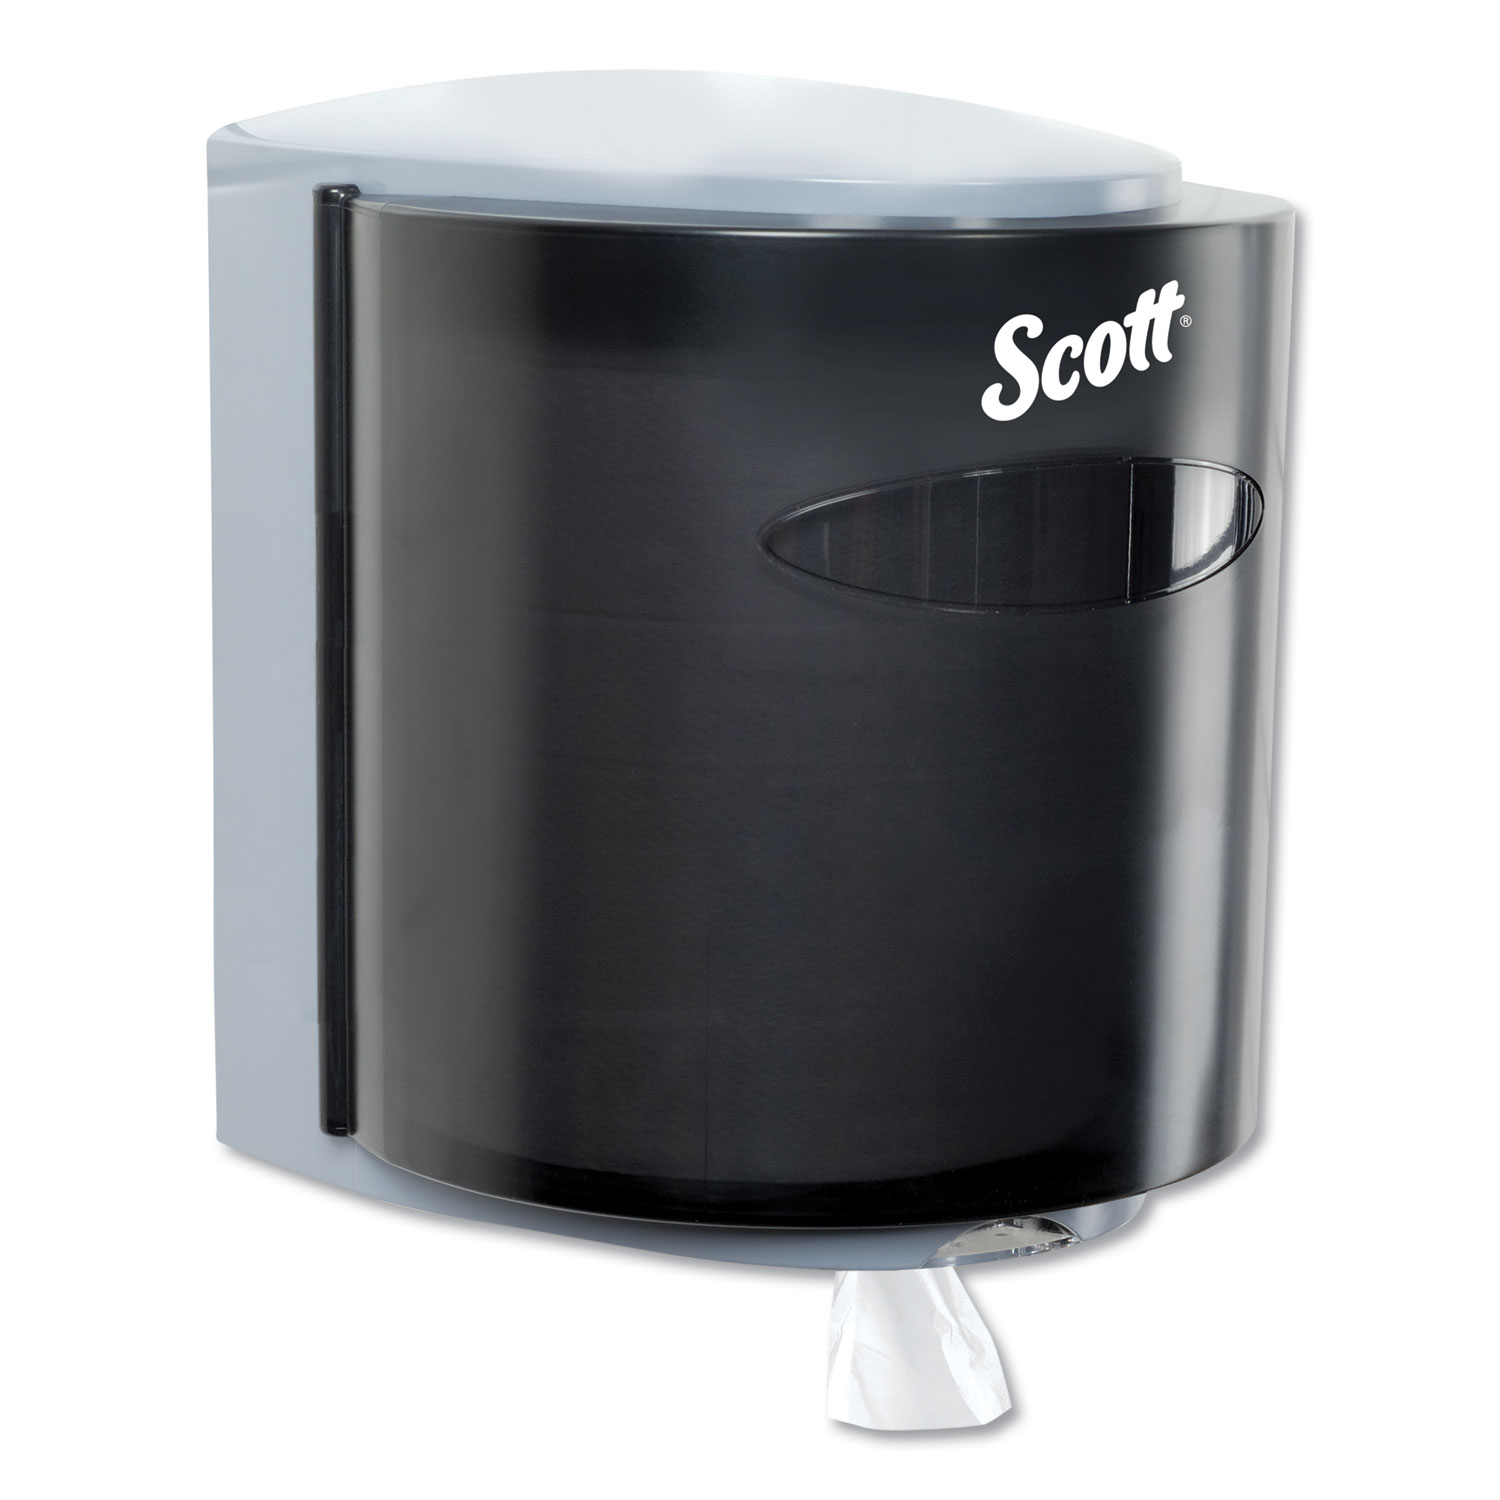  Scott 09989 Roll Control Center Pull Towel Dispenser, 10 3/10w x9 3/10 x11 9/10h, Smoke/Gray (KCC09989) 